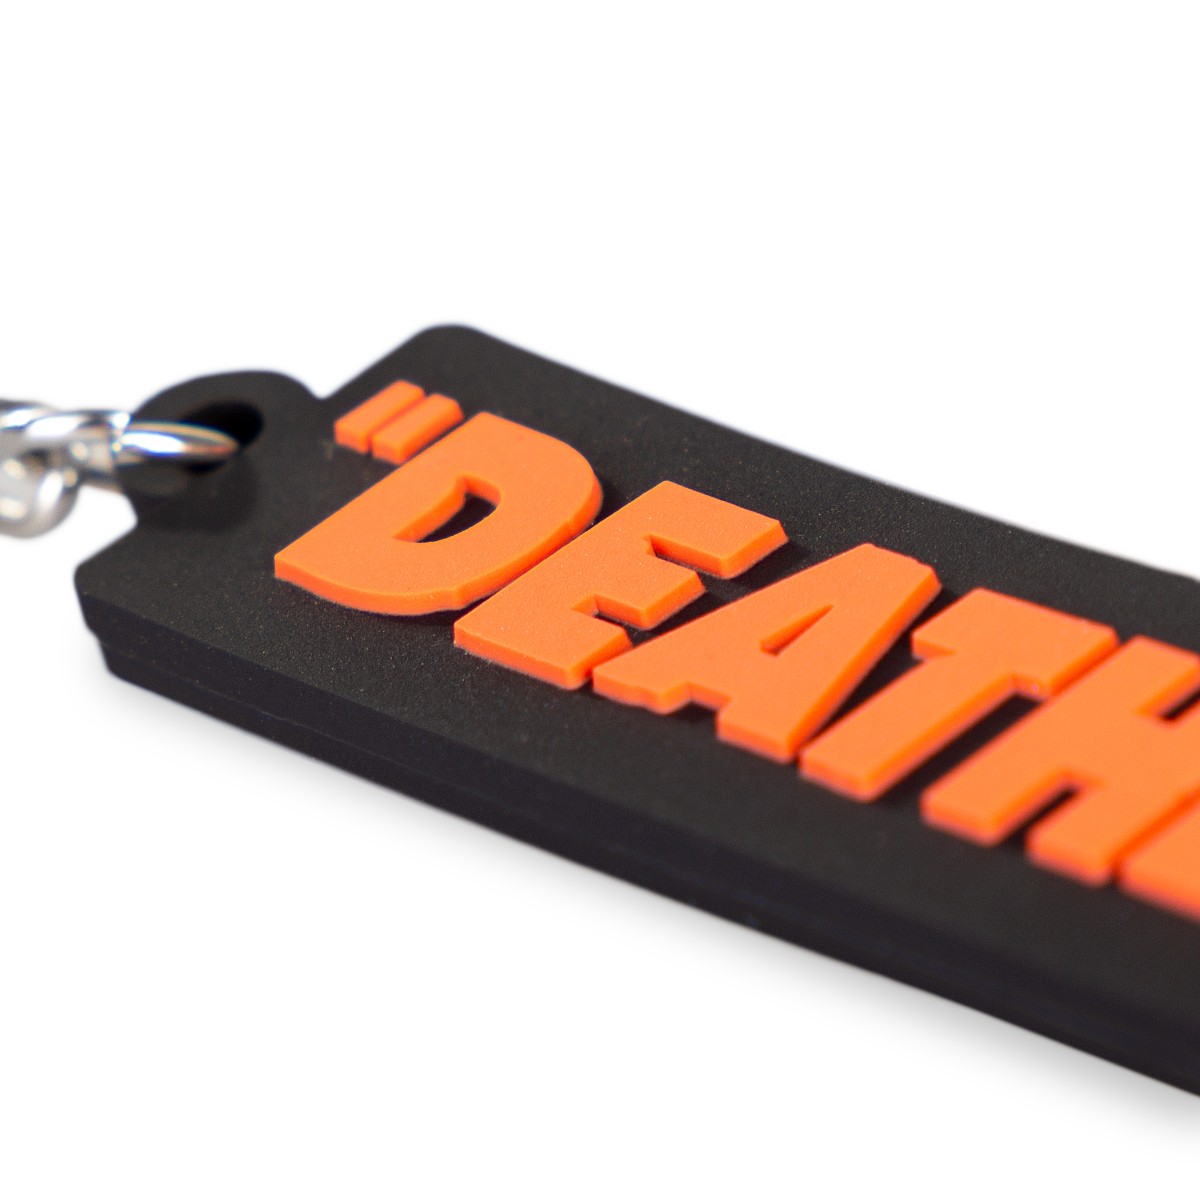 Deathloop Logo raktų pakabukas